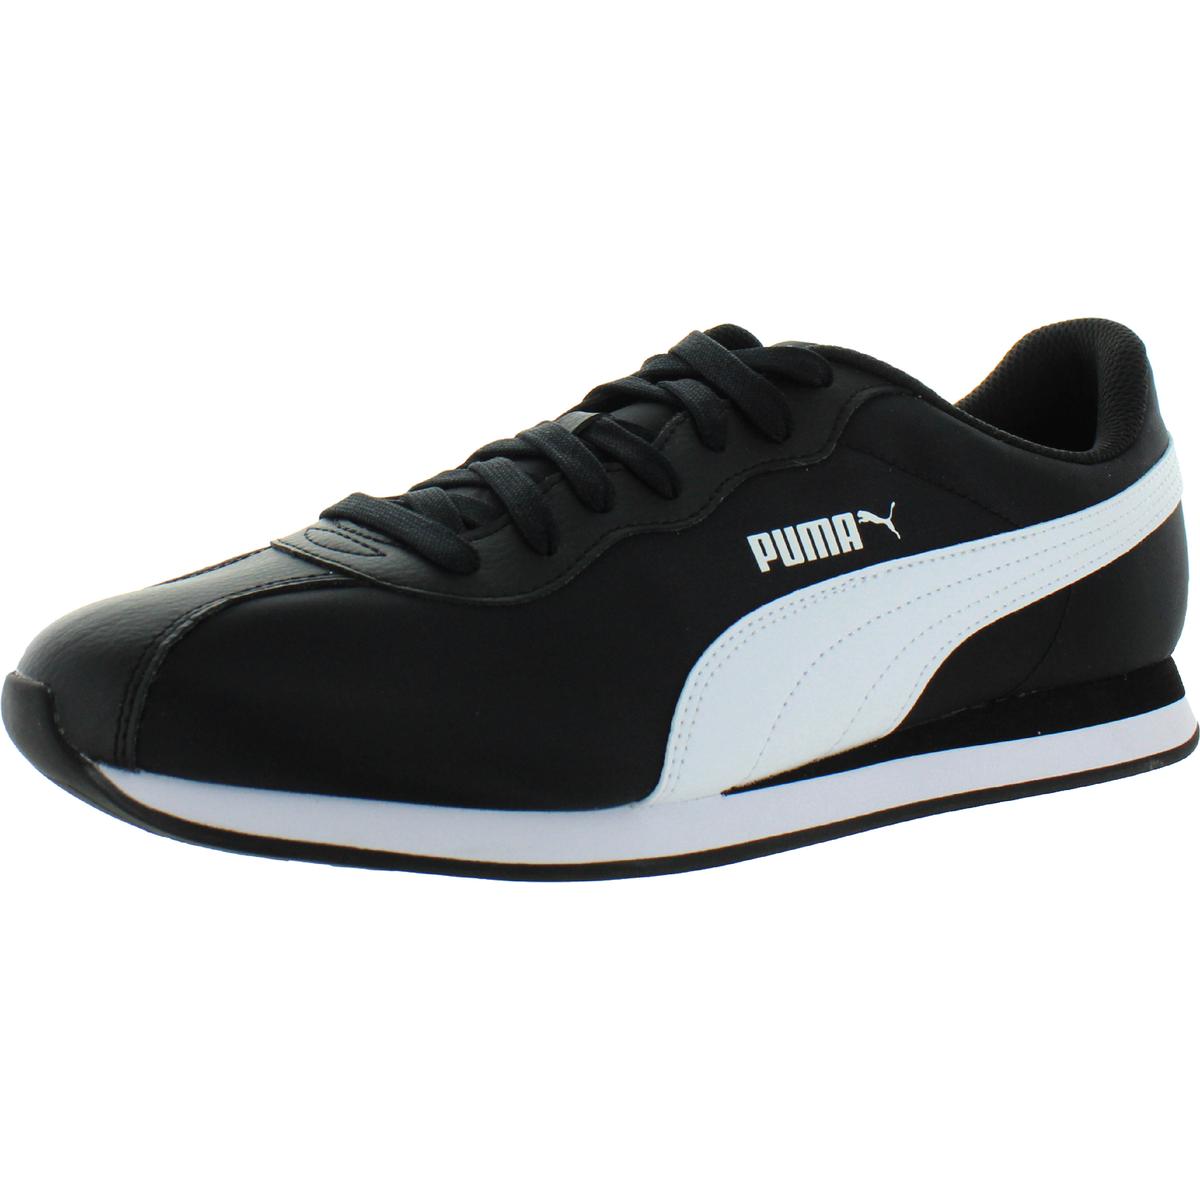 Puma Mens Turin II Black Logo Trainer Sneakers Shoes 11 Medium (D) BHFO ...